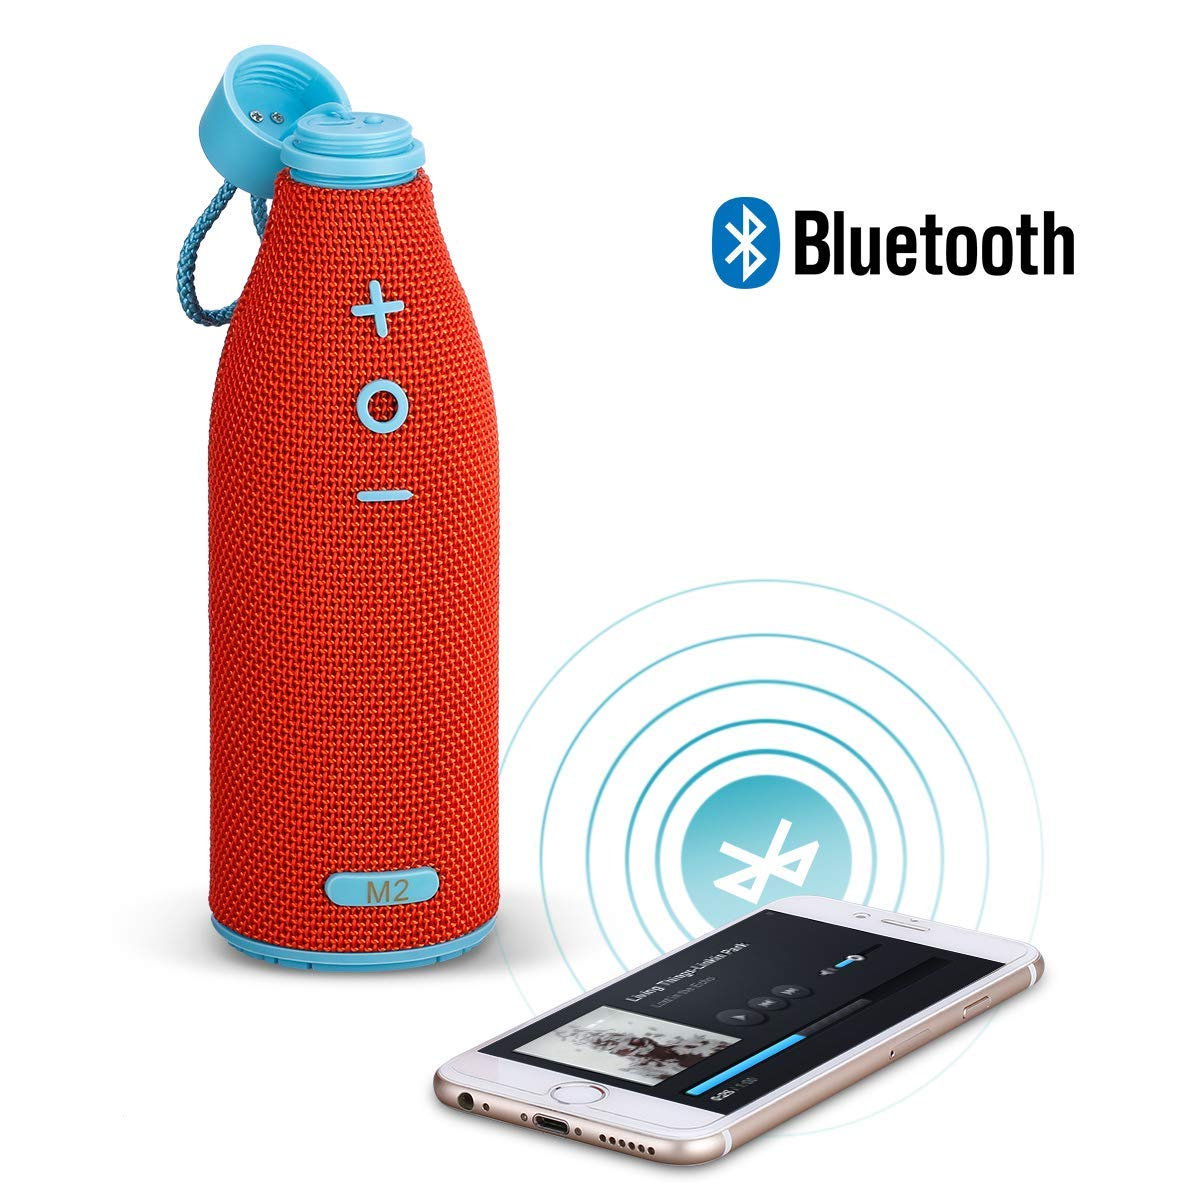 Altavoz Bluetooth 4.1 de 5W solo 9,99€